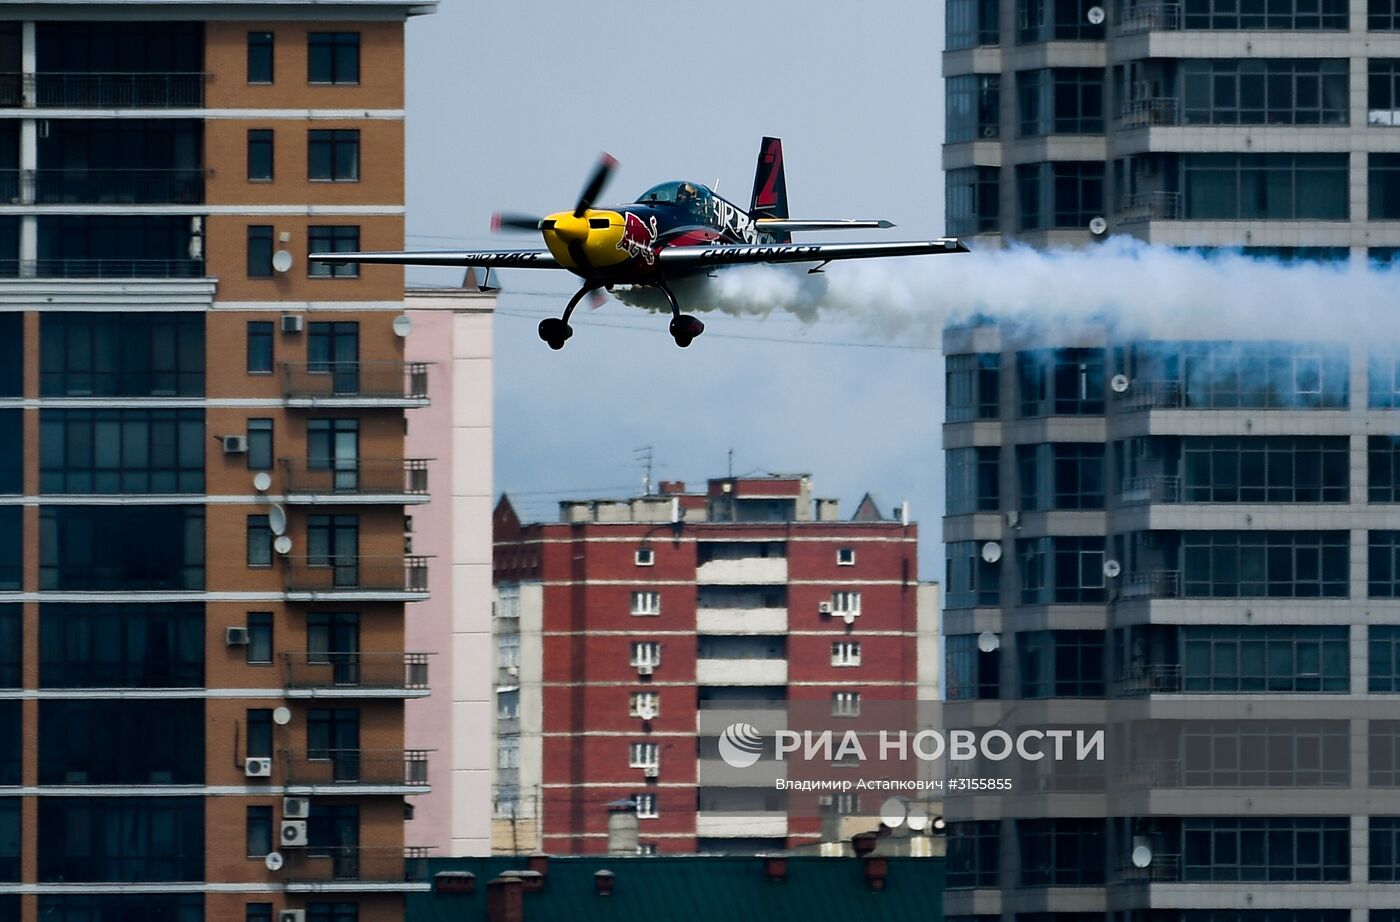 Подготовка к этапу чемпионата мира Red Bull Air Race в Казани